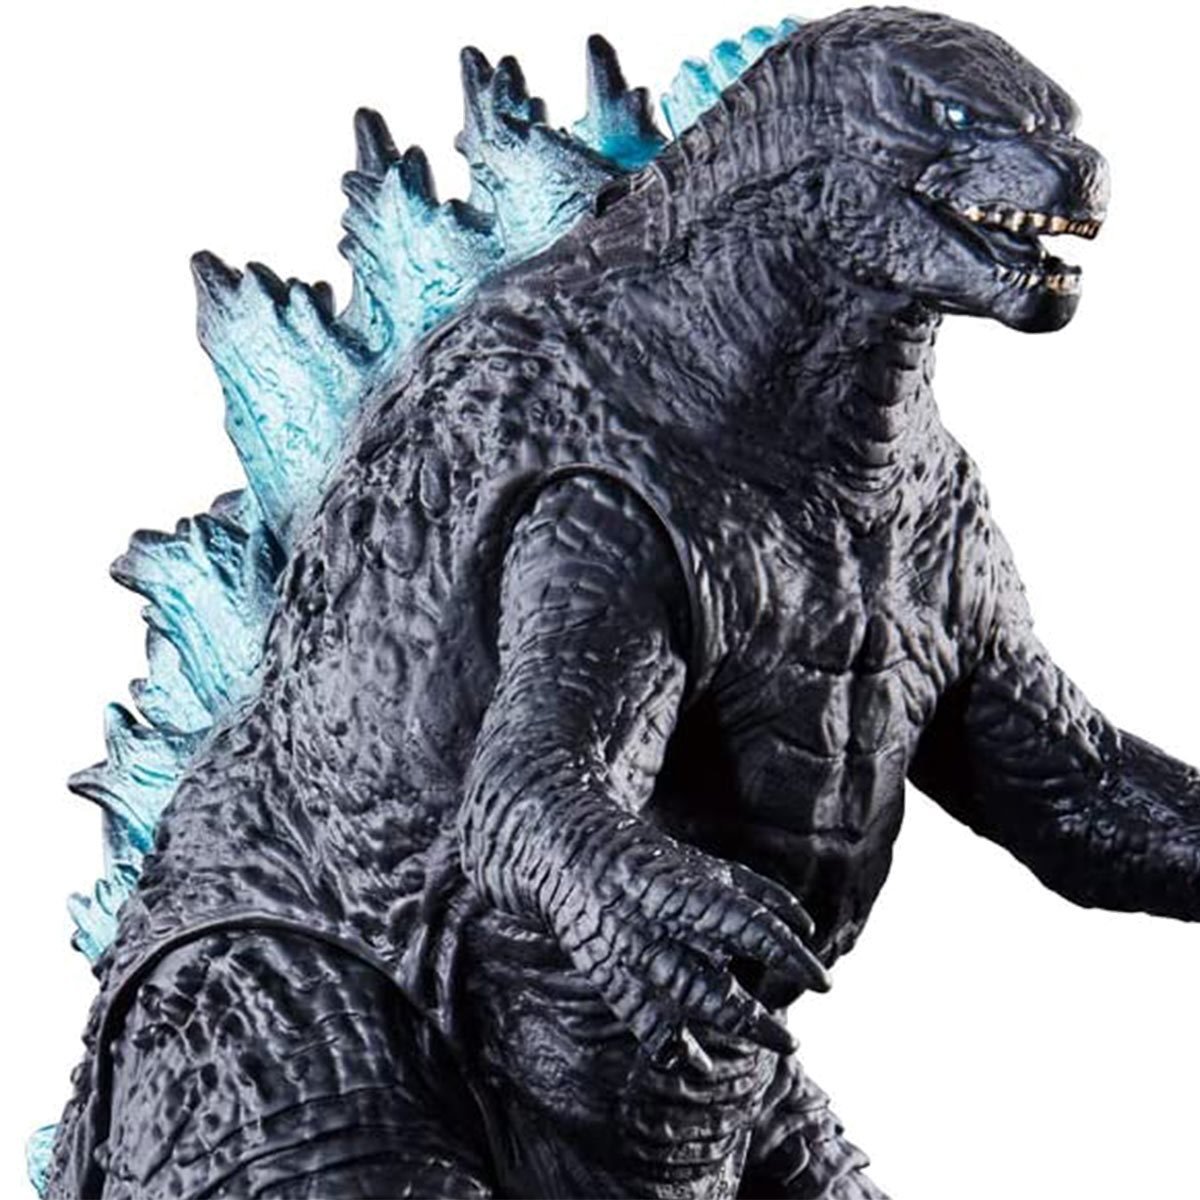 BANDAI NAMCO Godzilla 2019 Movie Monster Series Vinyl Figure